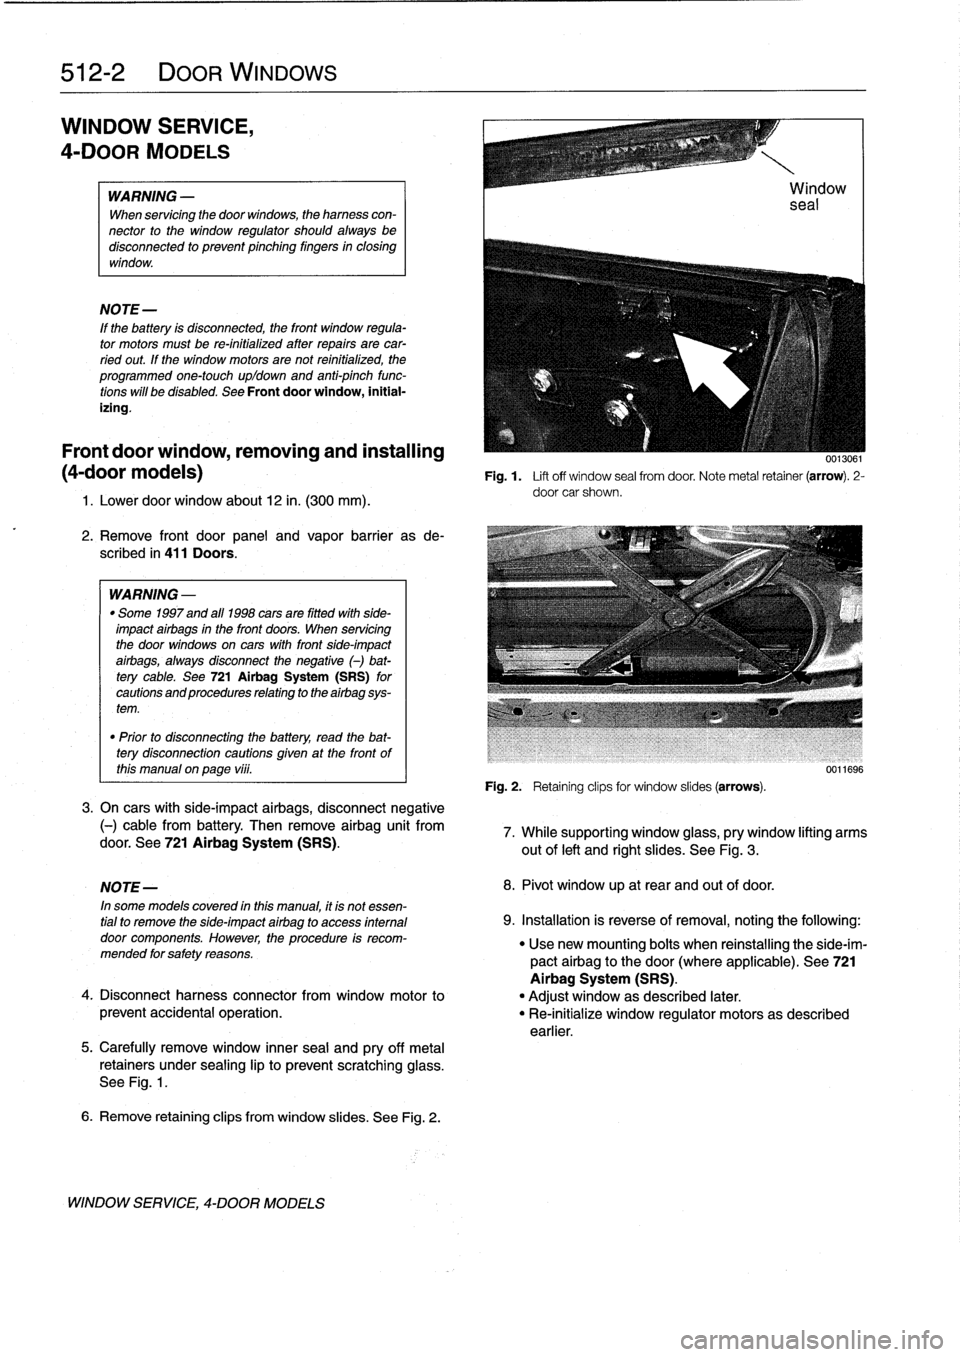 BMW 318i 1996 E36 Workshop Manual 
512-2

	

DOOR
WINDOWS

WINDOW
SERVICE,

4-DOOR
MODELS

WARNING
-

When
servicing
the
door
wíndows,
theharness
con-
nector
to
the
window
regulator
shouldalways
be
disconnected
to
prevent
pinching
fi